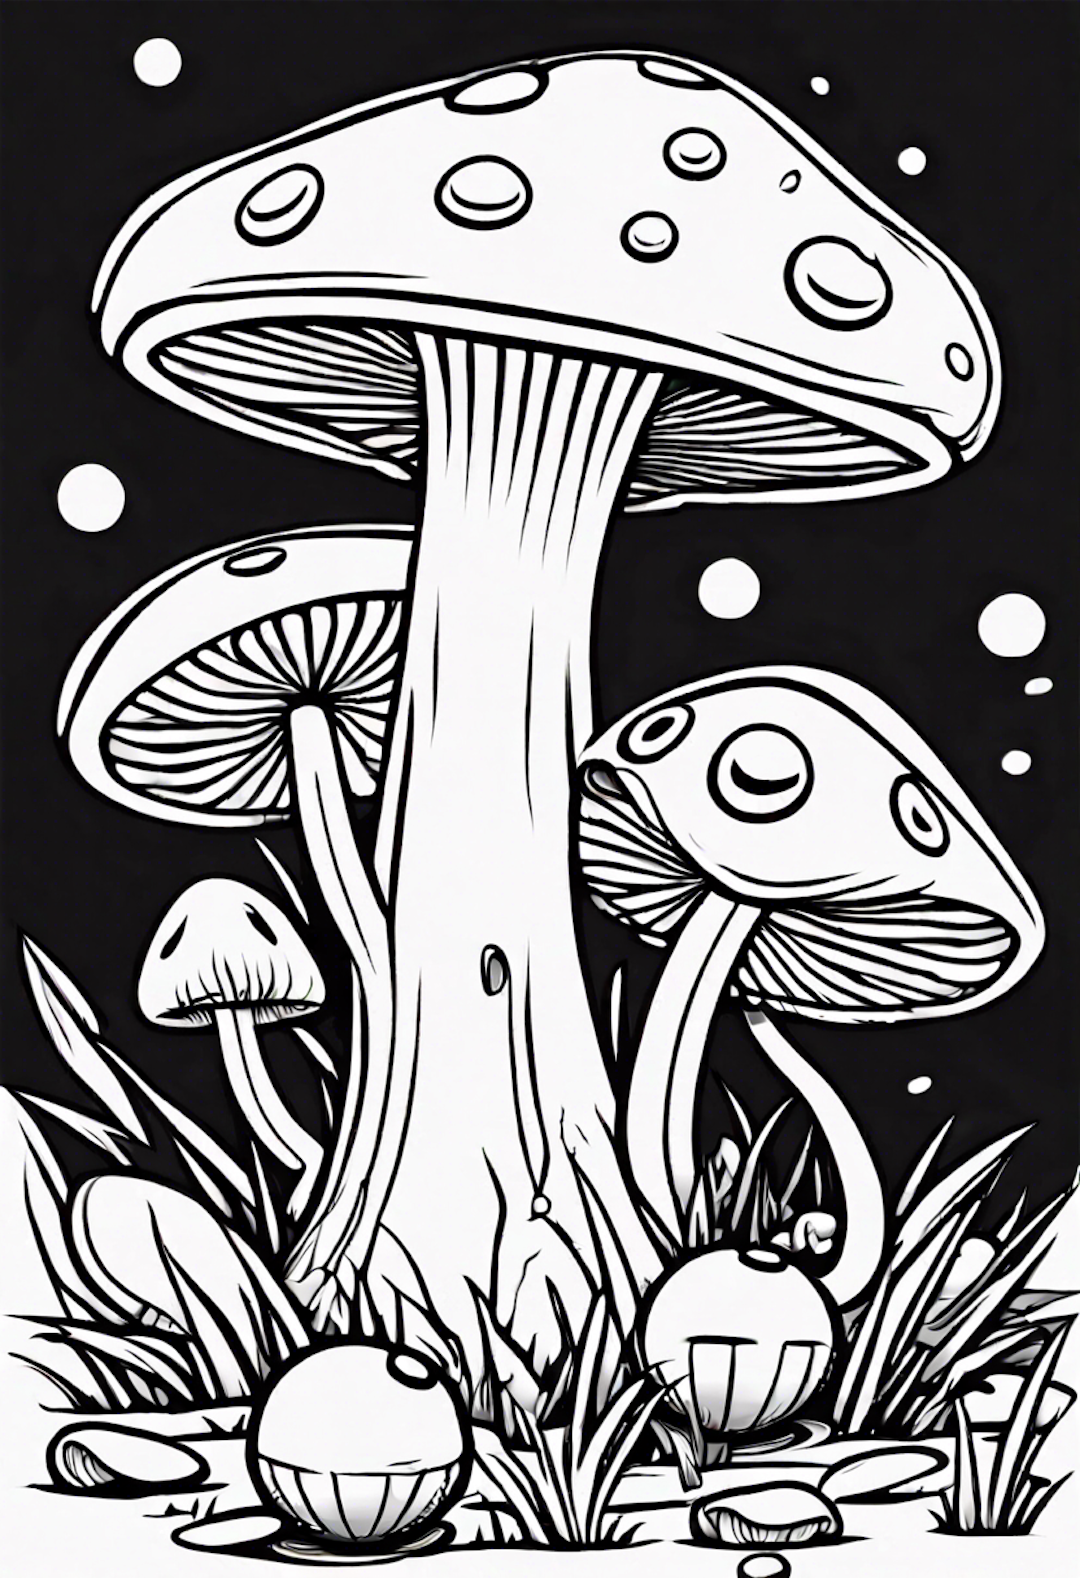 A Cartoon Mushroom Playing With A Ball